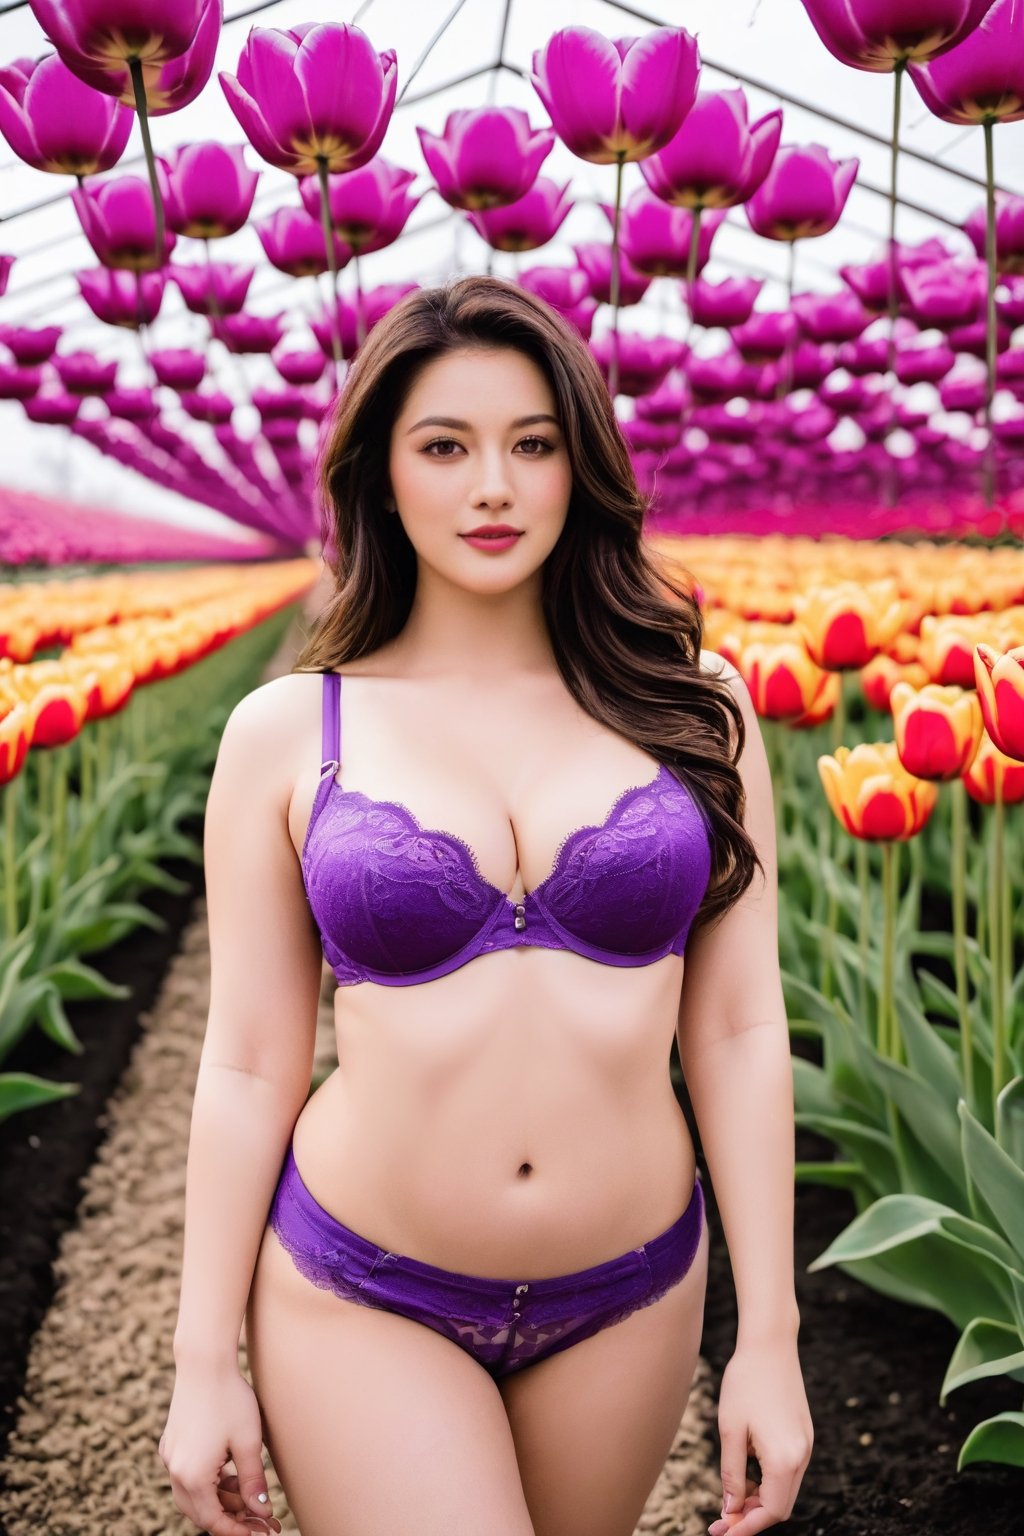 Big breasted girl, wearing purple bra, standing in tulip garden